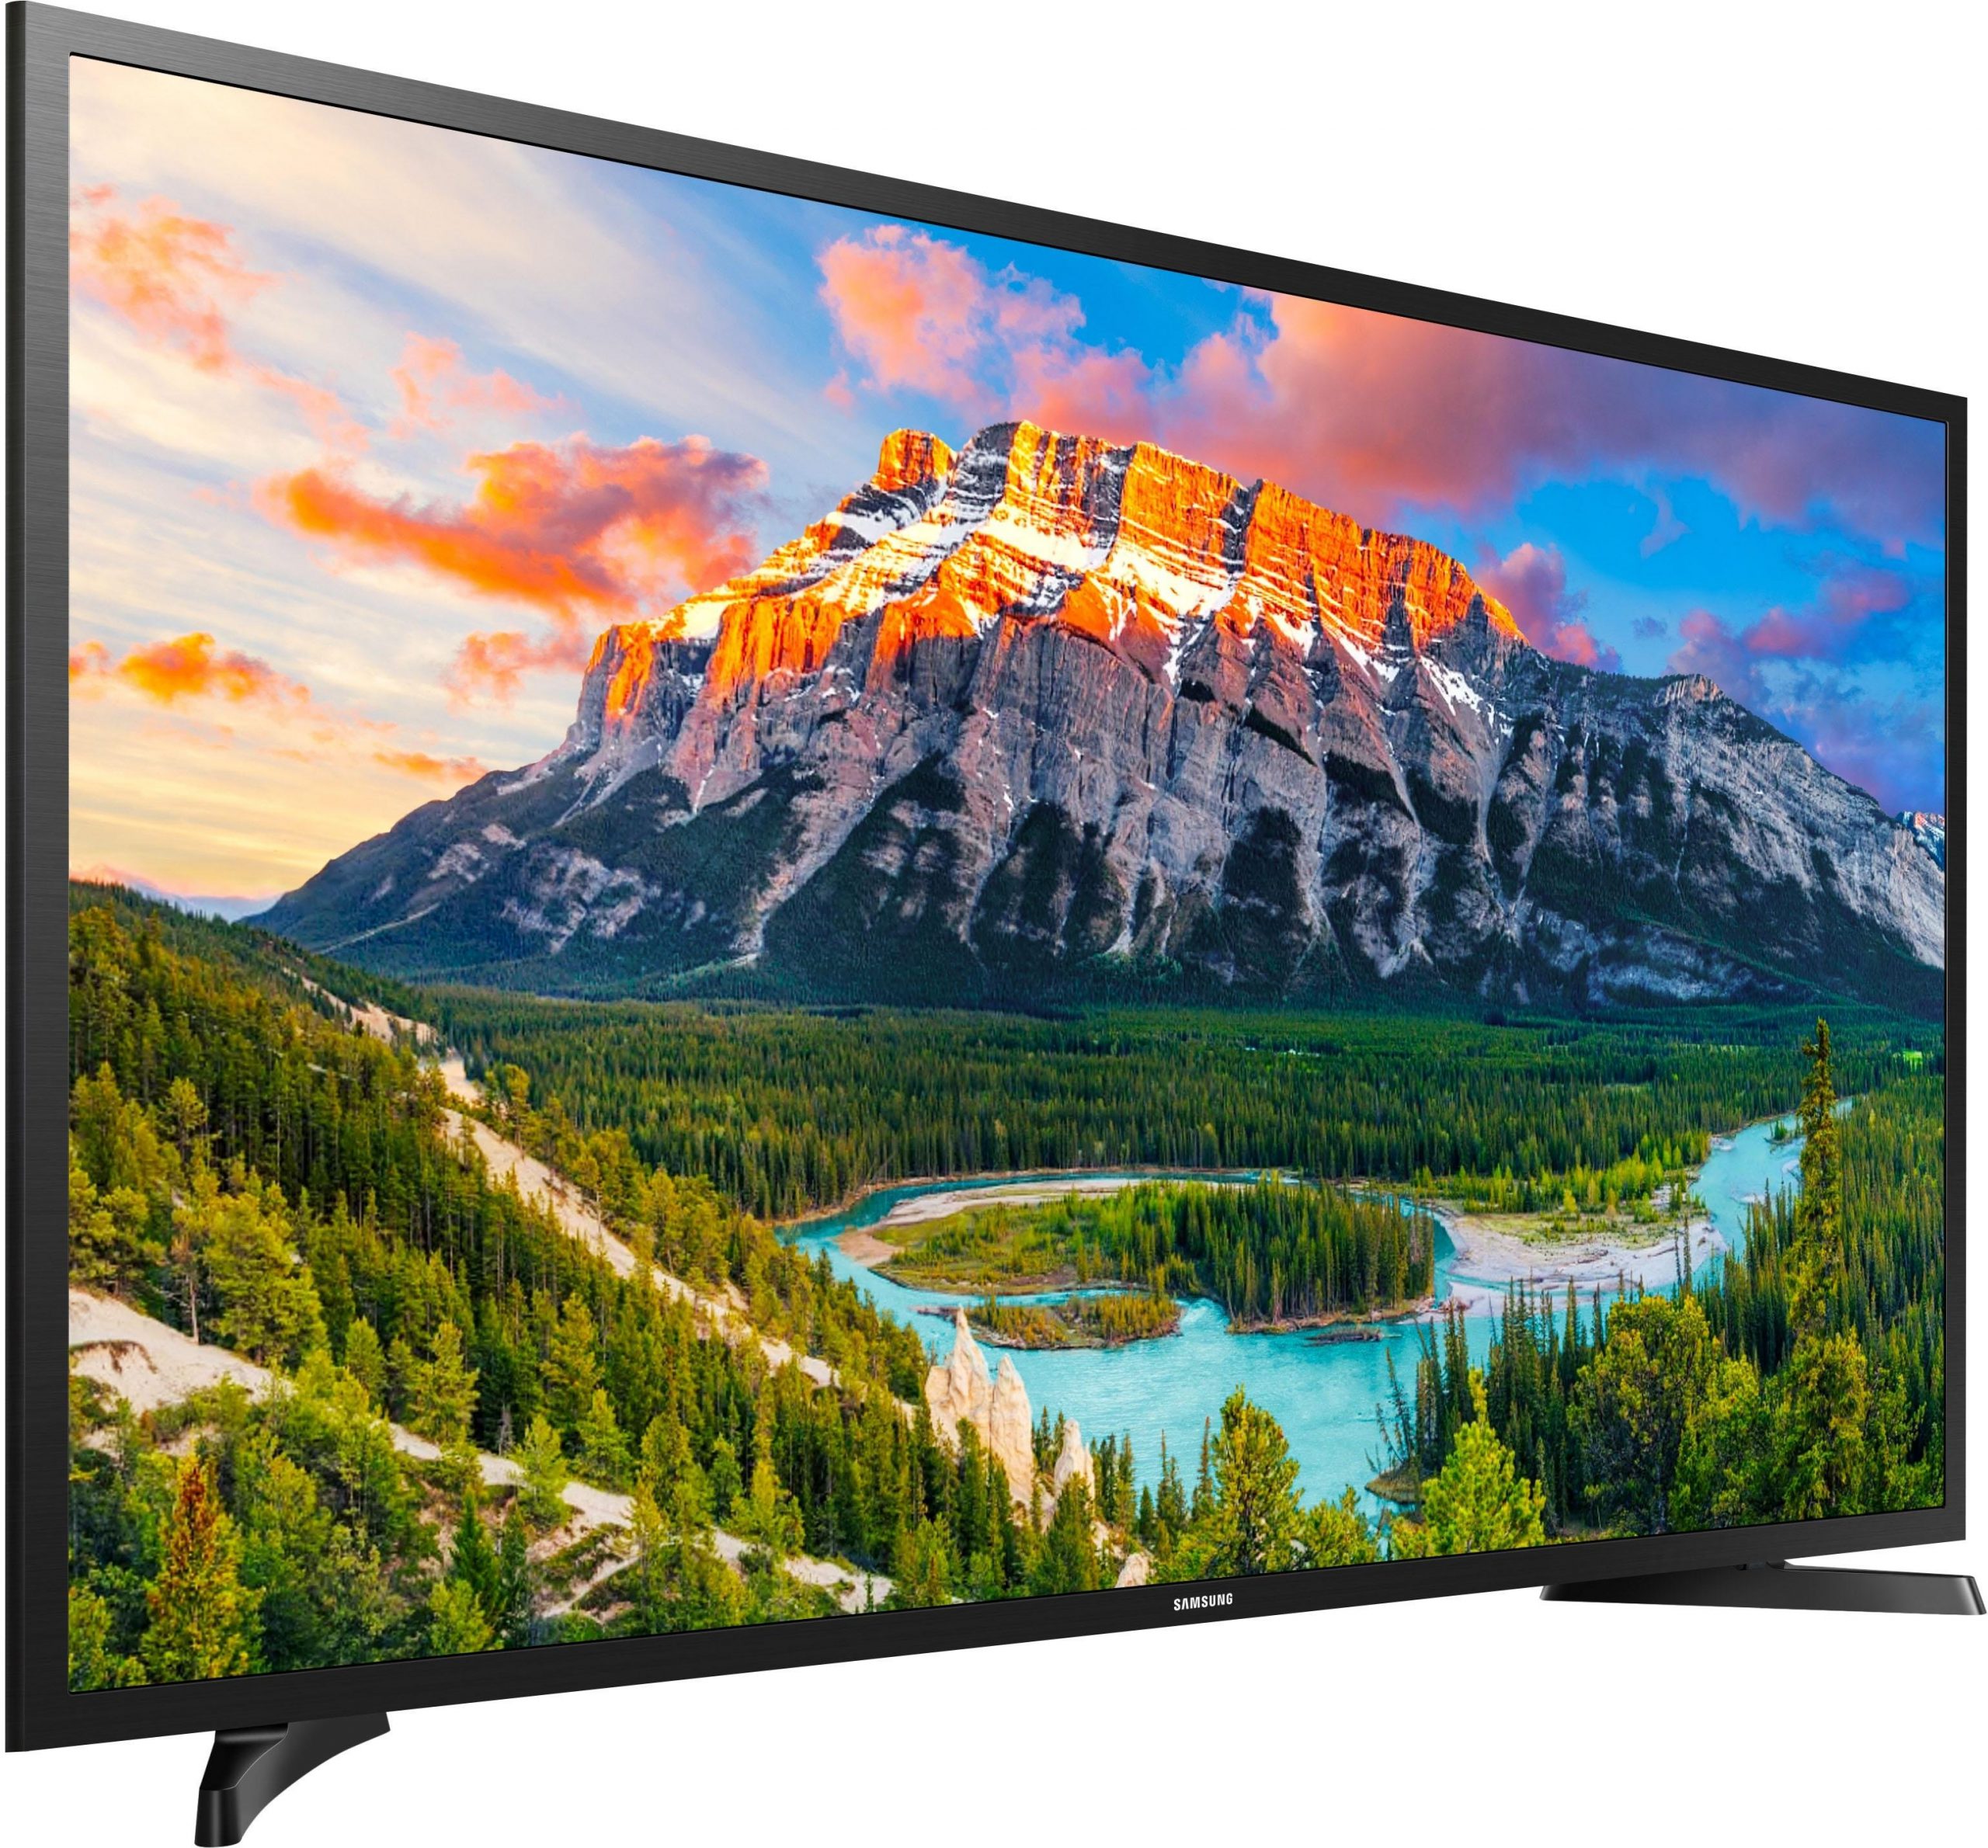 Samsung 32 inch tv